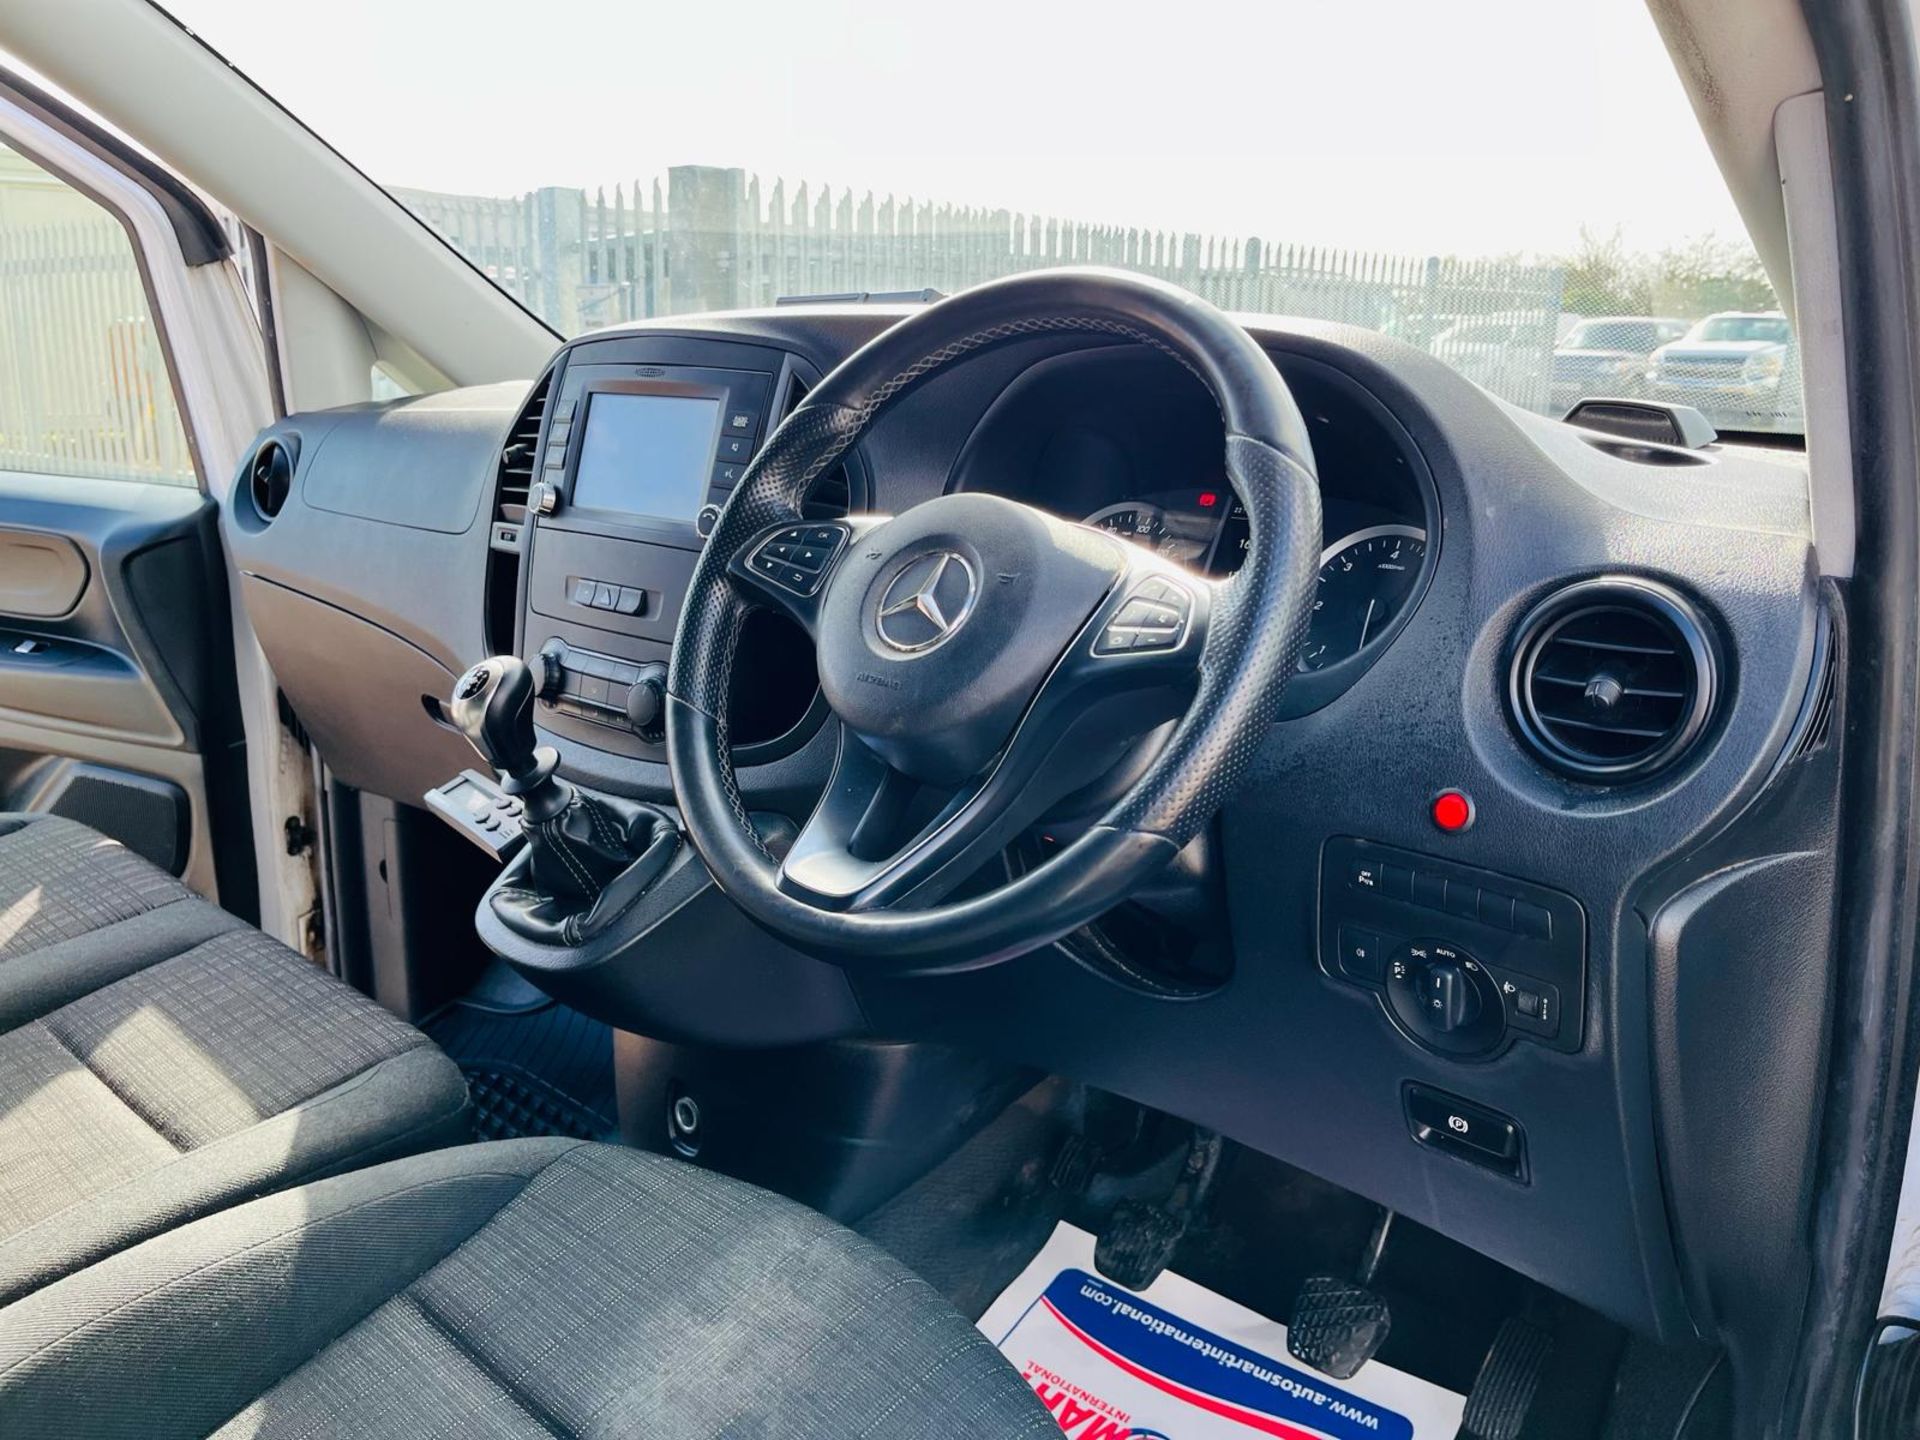 Mercedes Benz Vito 2.1 114 CDI BlueTec PURE Fridge/Freezer 2019 '69 Reg' - ULEZ Compliant - Image 18 of 29